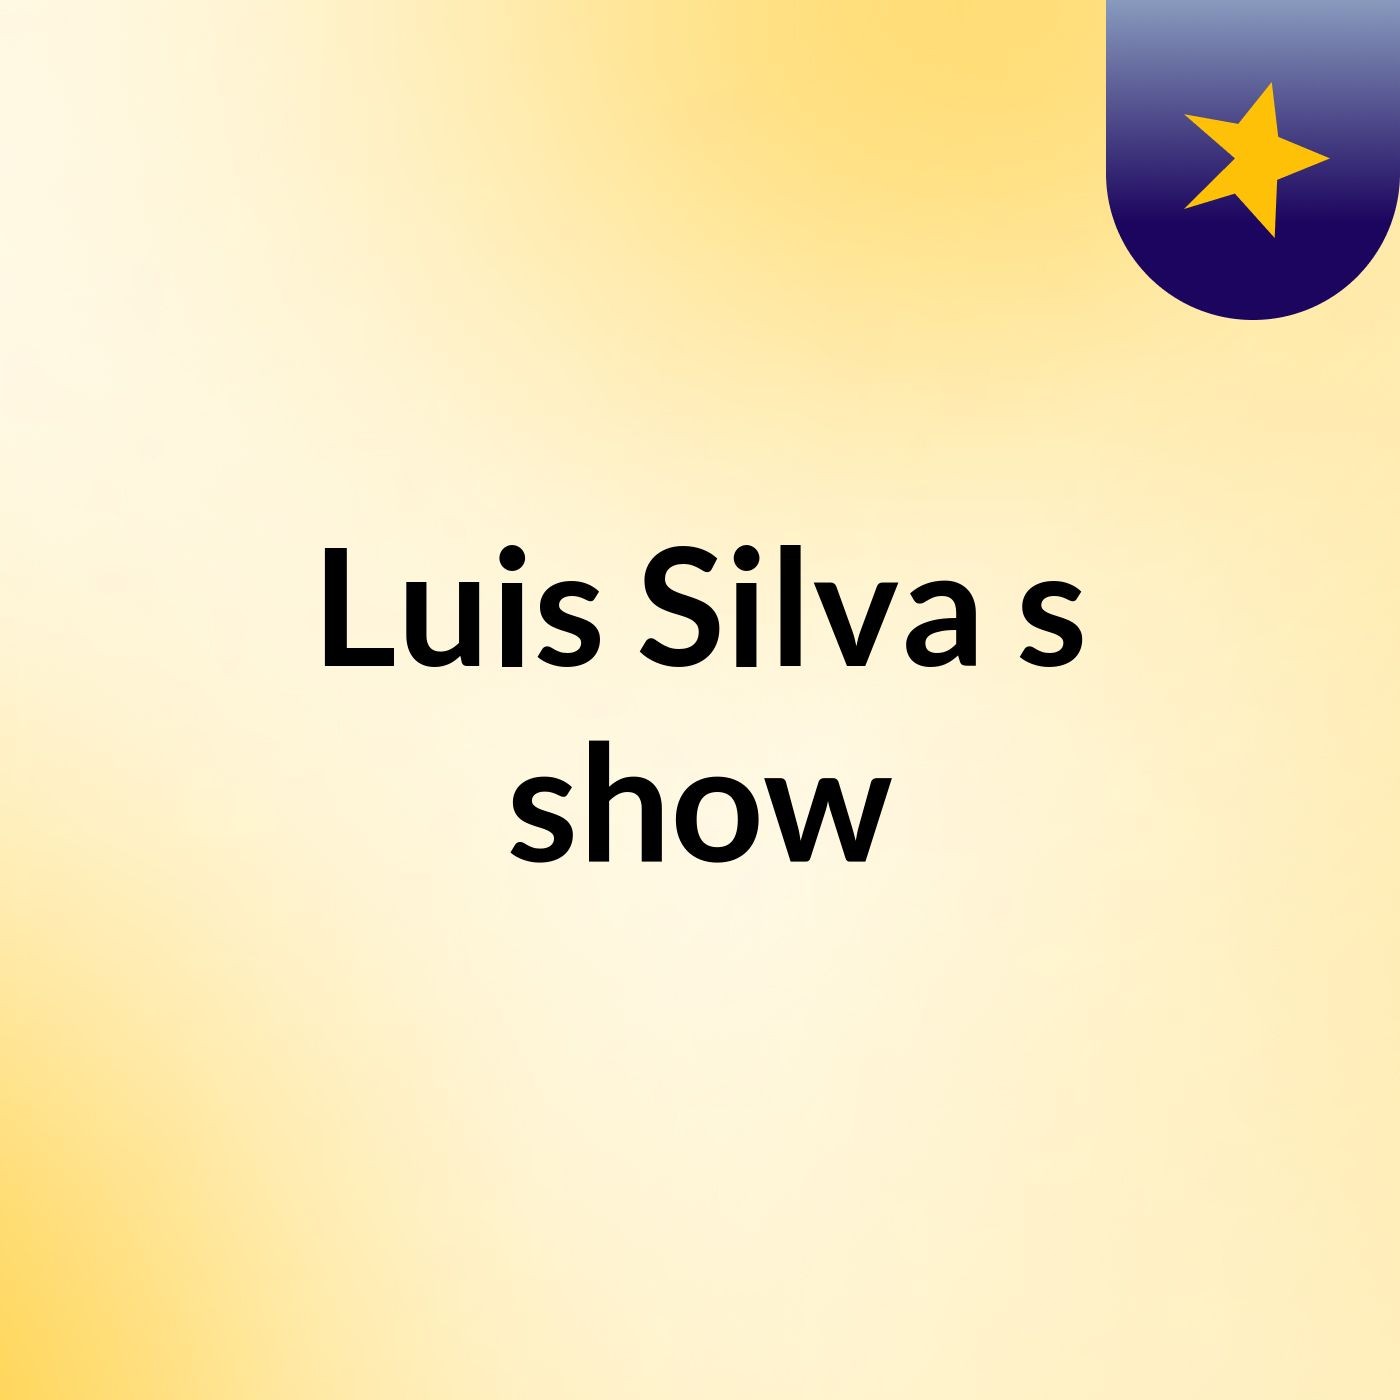 Luis Silva's show